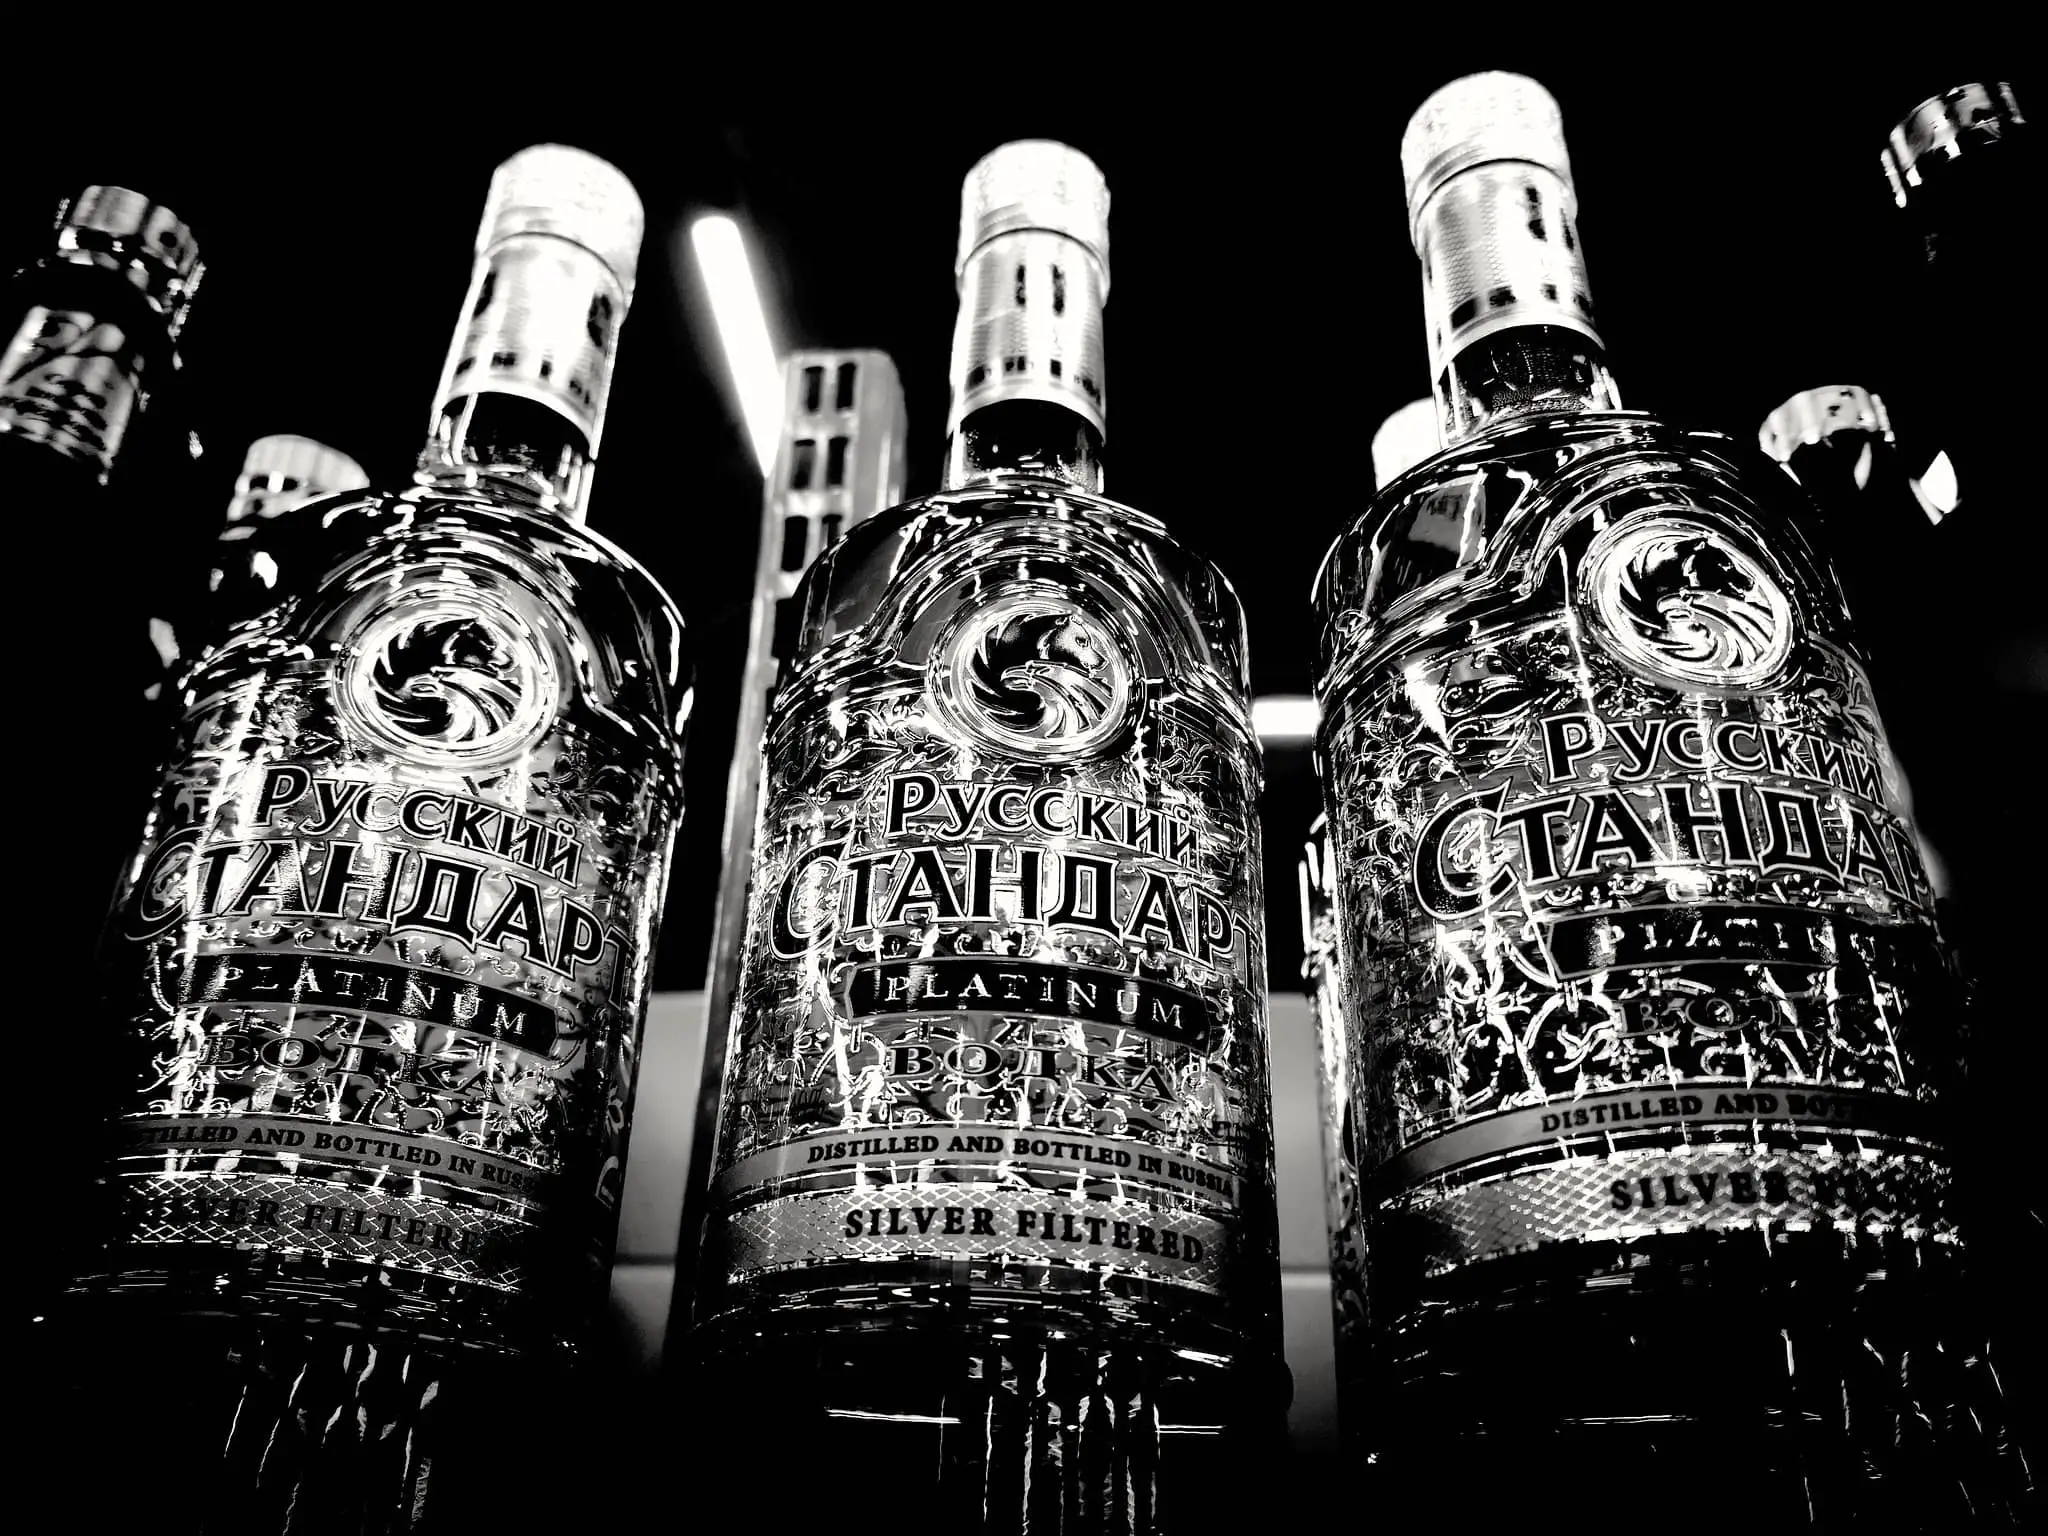 bottles of Russian Standard vodka